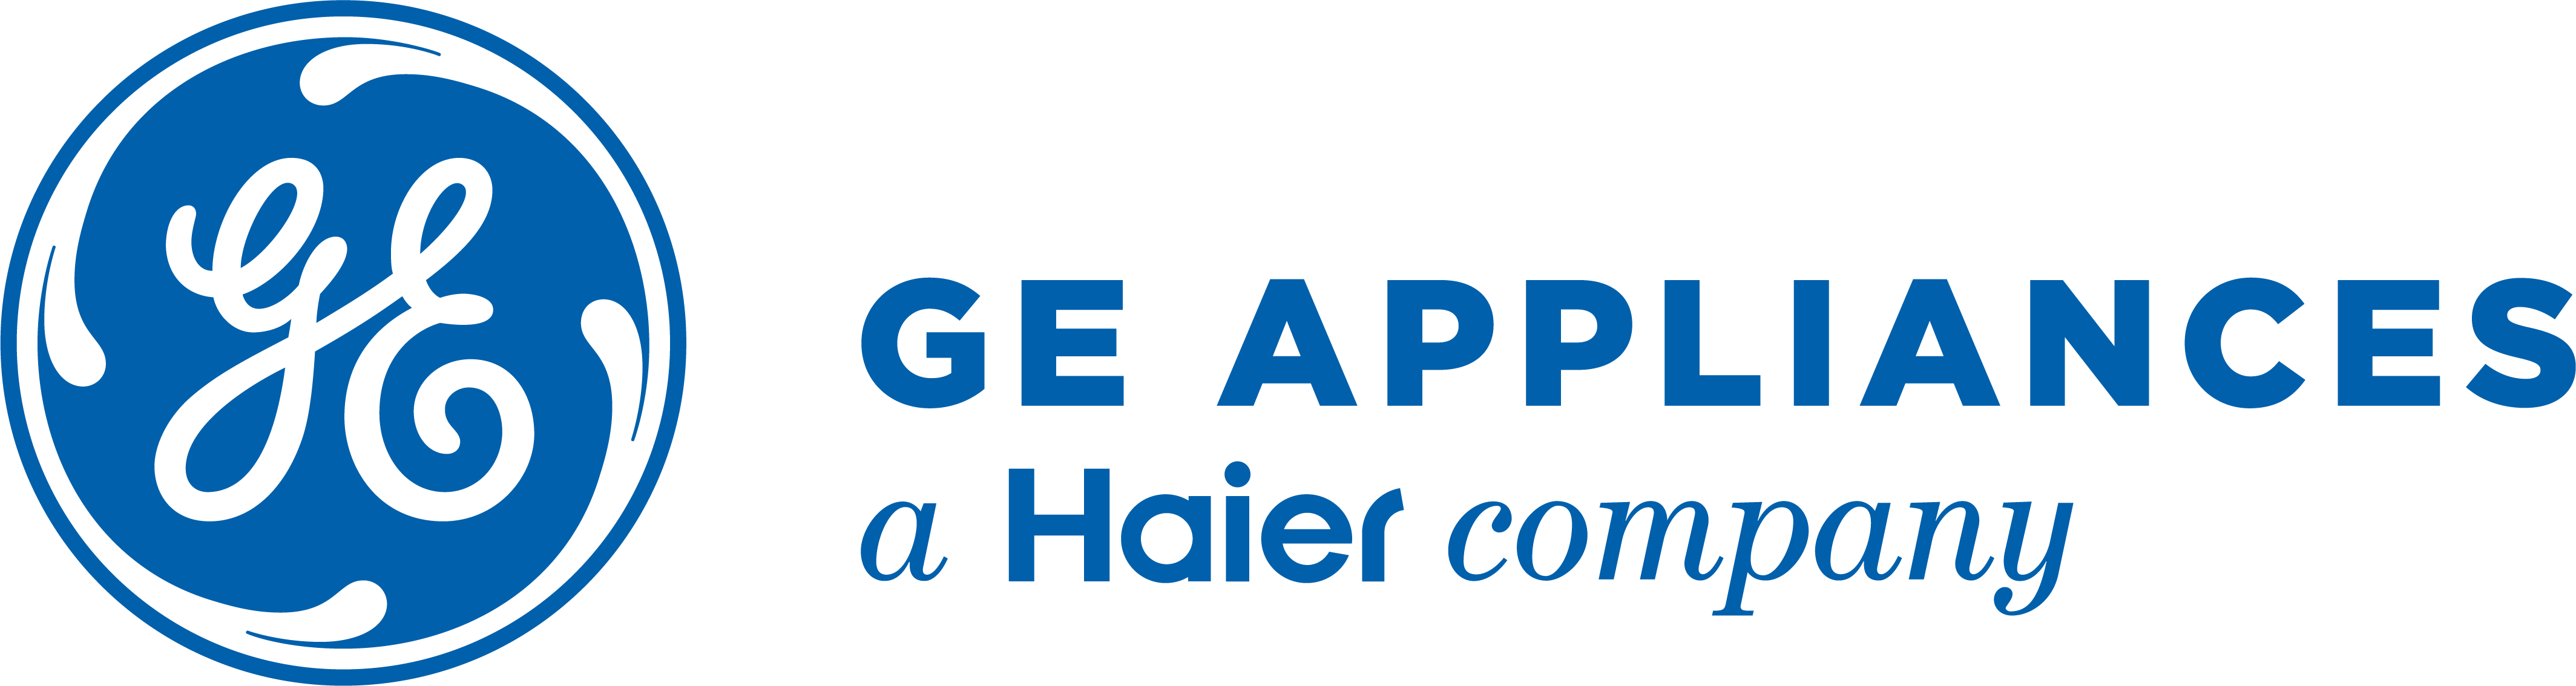 GE Appliances a Haier Company